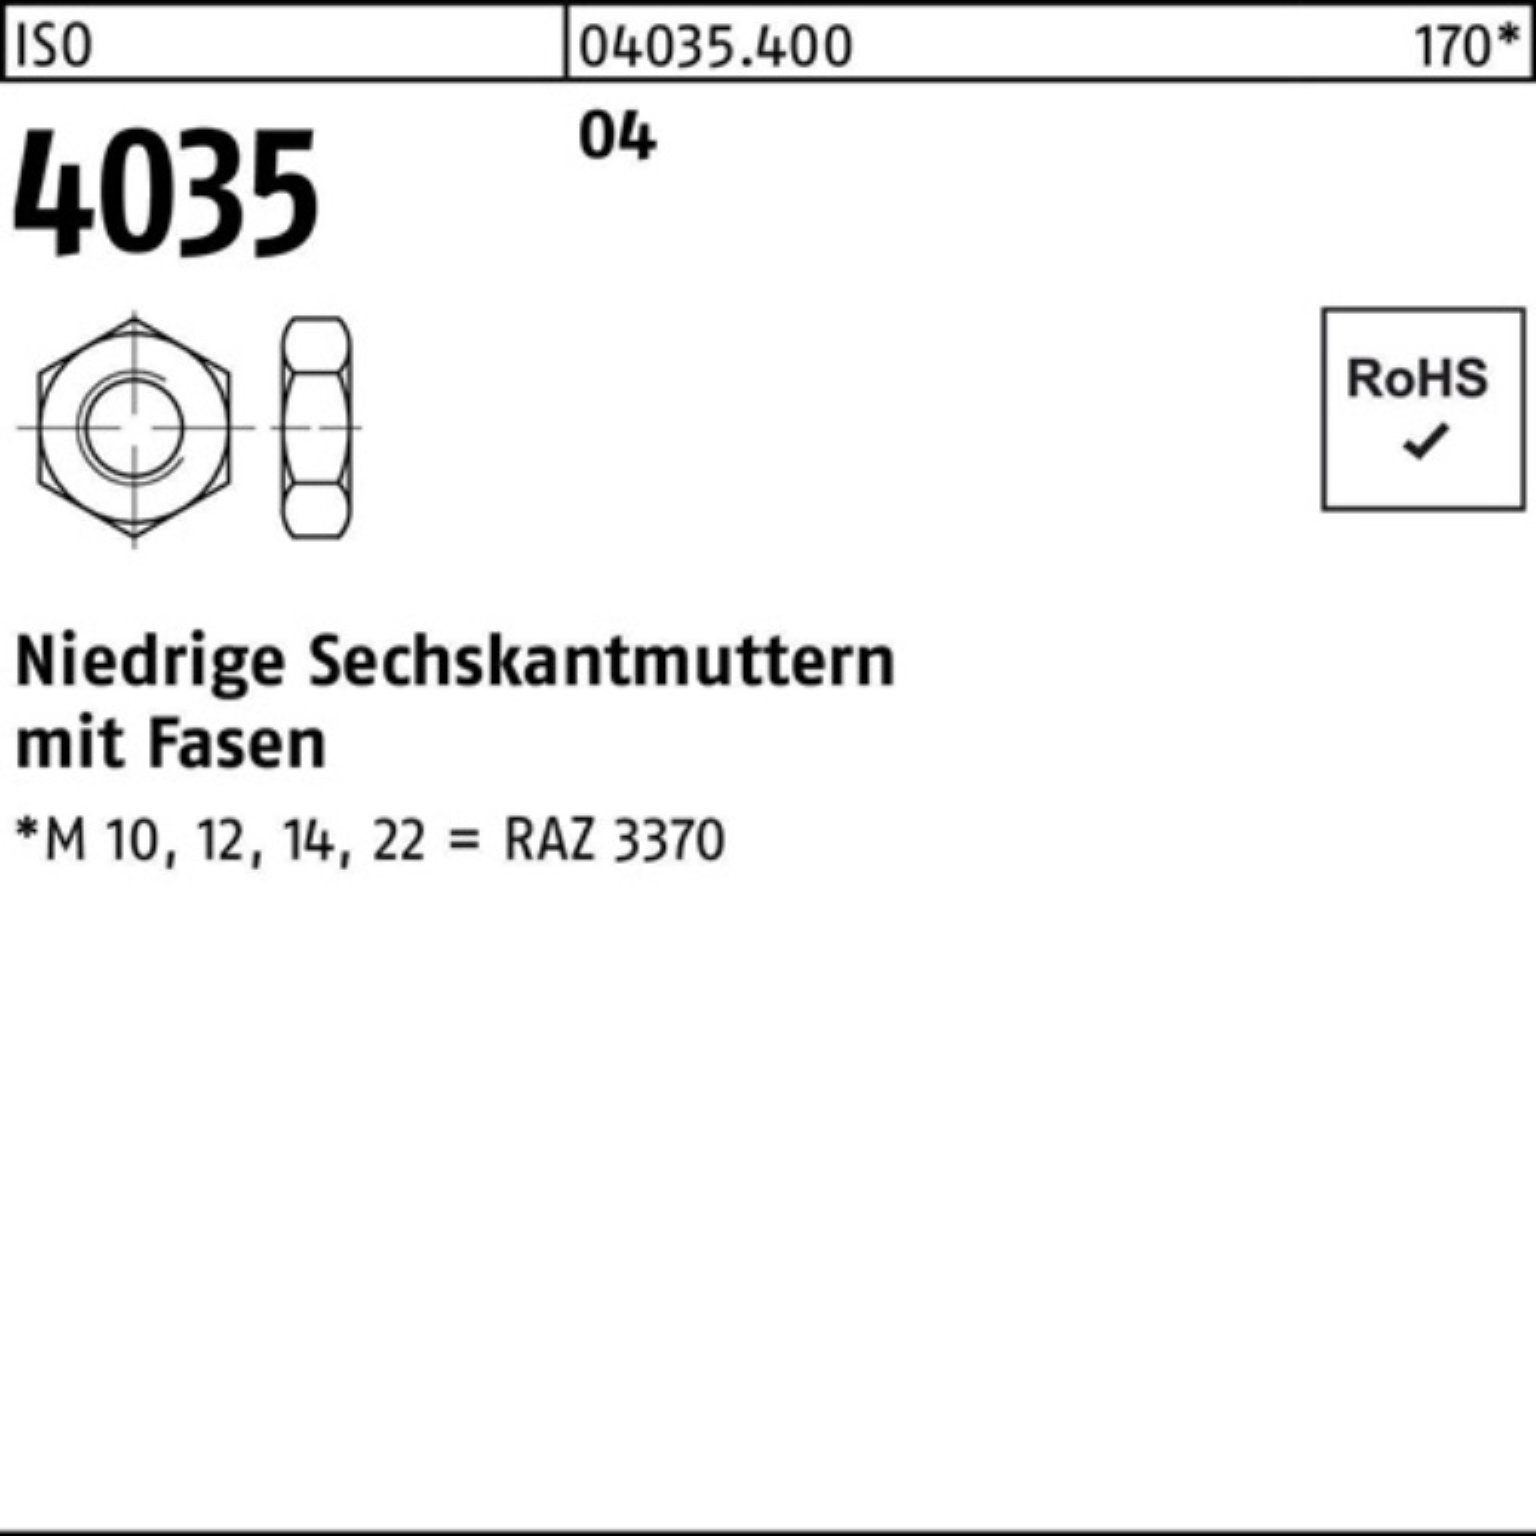 Reyher Muttern Automatenstahl Sechskantmutter 5 ISO Pack M24 niedrig Fasen 100er 4035